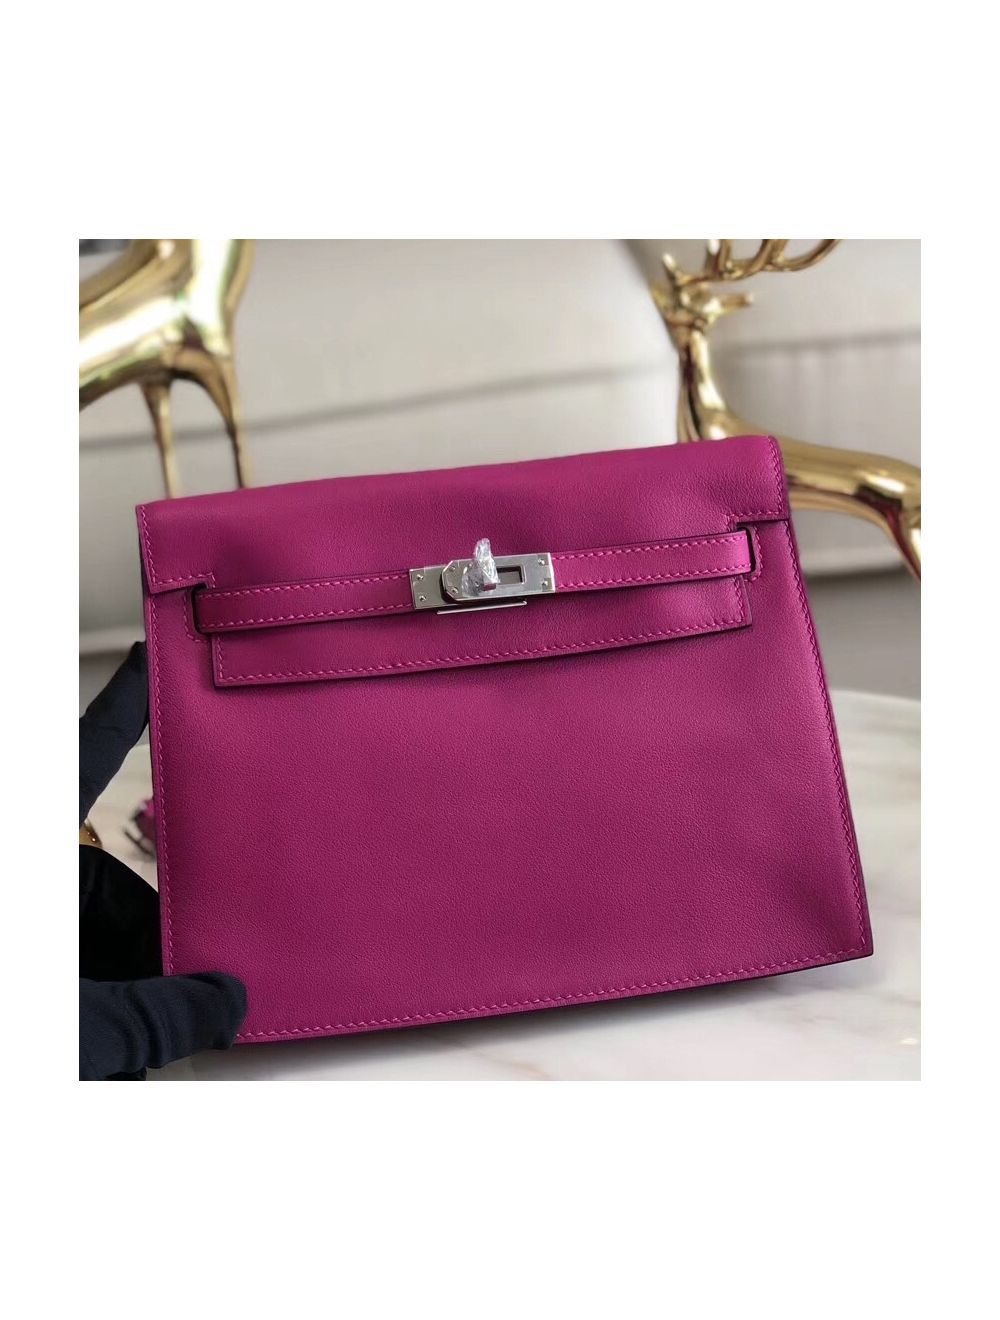 Replica Hermes Kelly Danse Handmade Bag In Rose Purple Swift Leather